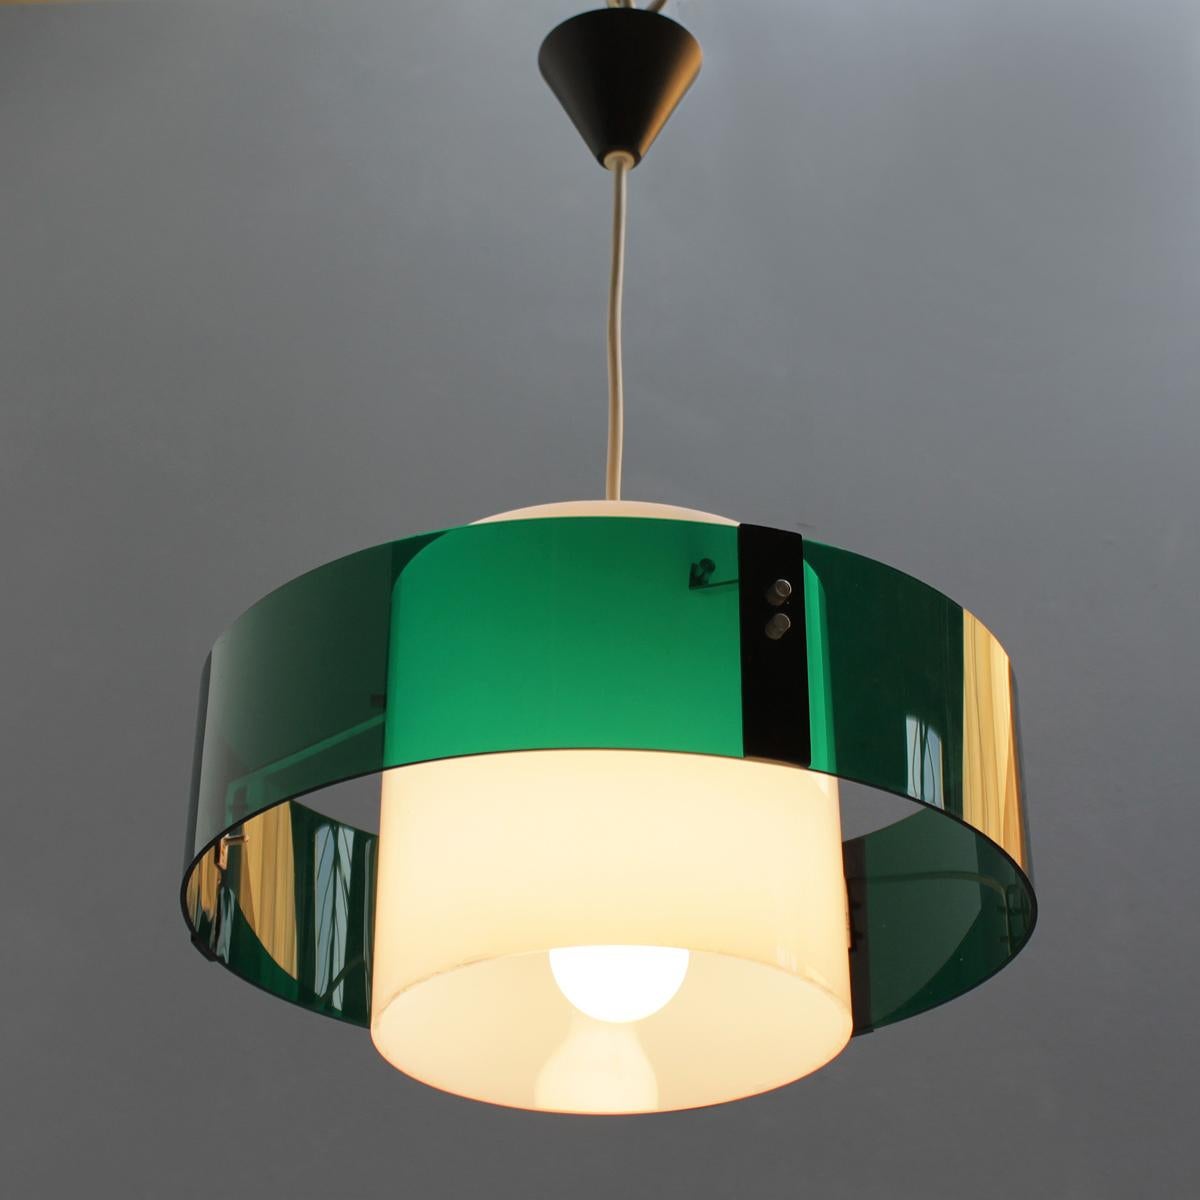 Mid-20th Century Modernist French Pendant Lamp